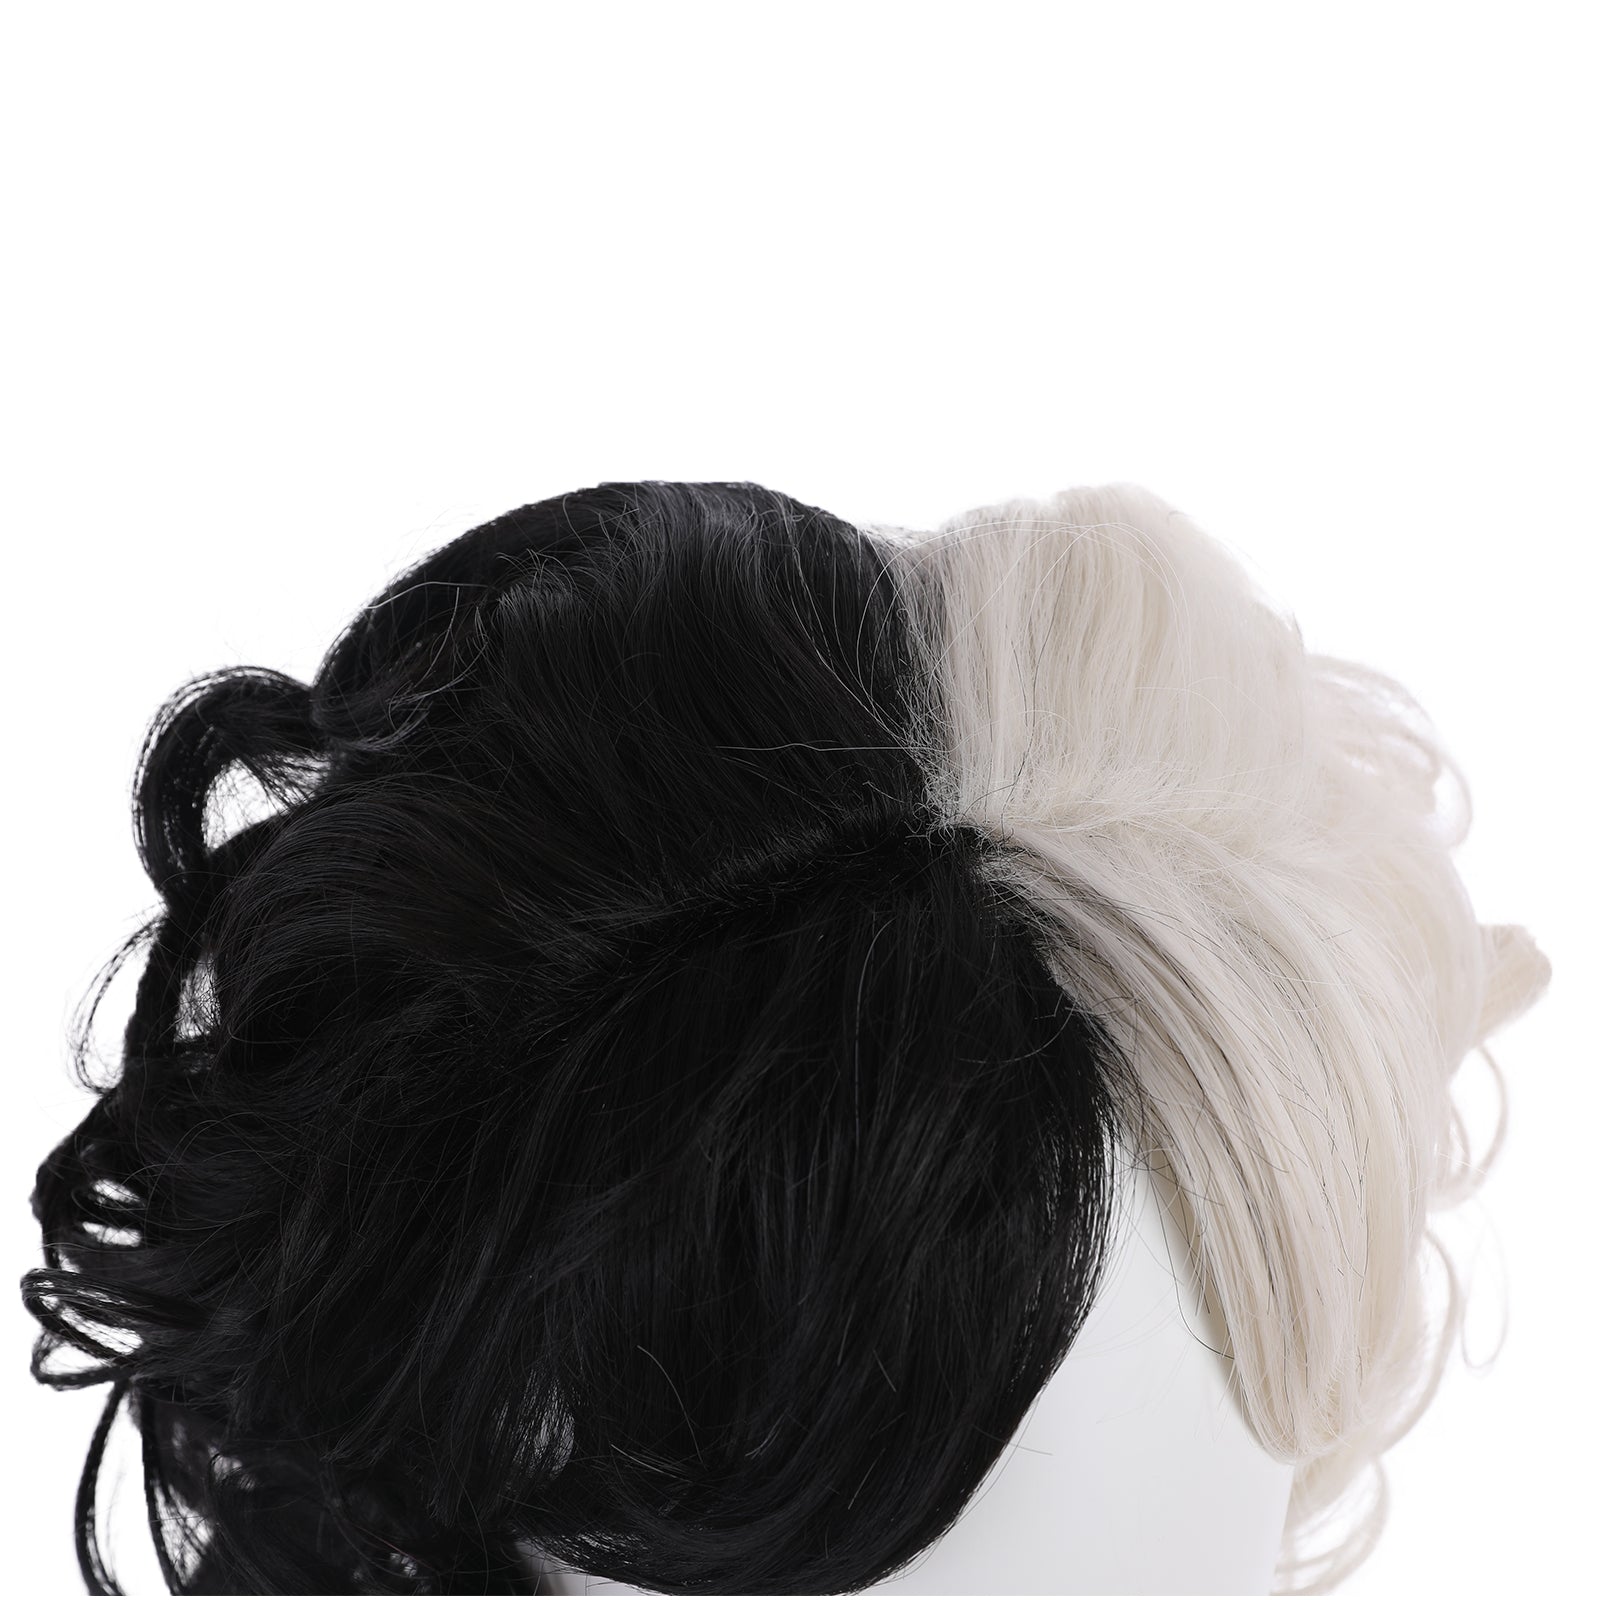 Rulercosplay Movie Cosplay Wigs Cruella De Vil Black and White Cosplay Wig